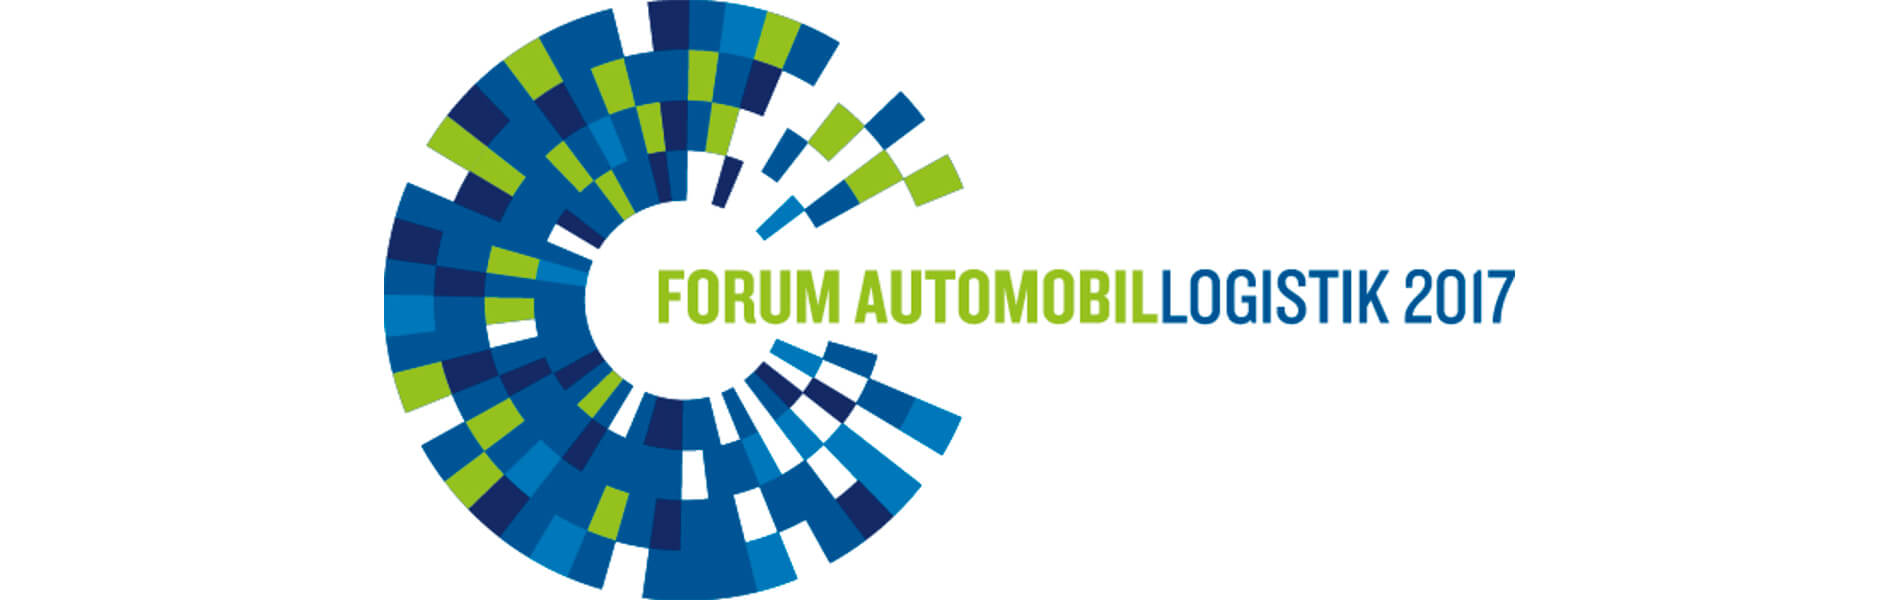 Forum Automobillogistik 2017: Branchen diskutieren Digitalisierung